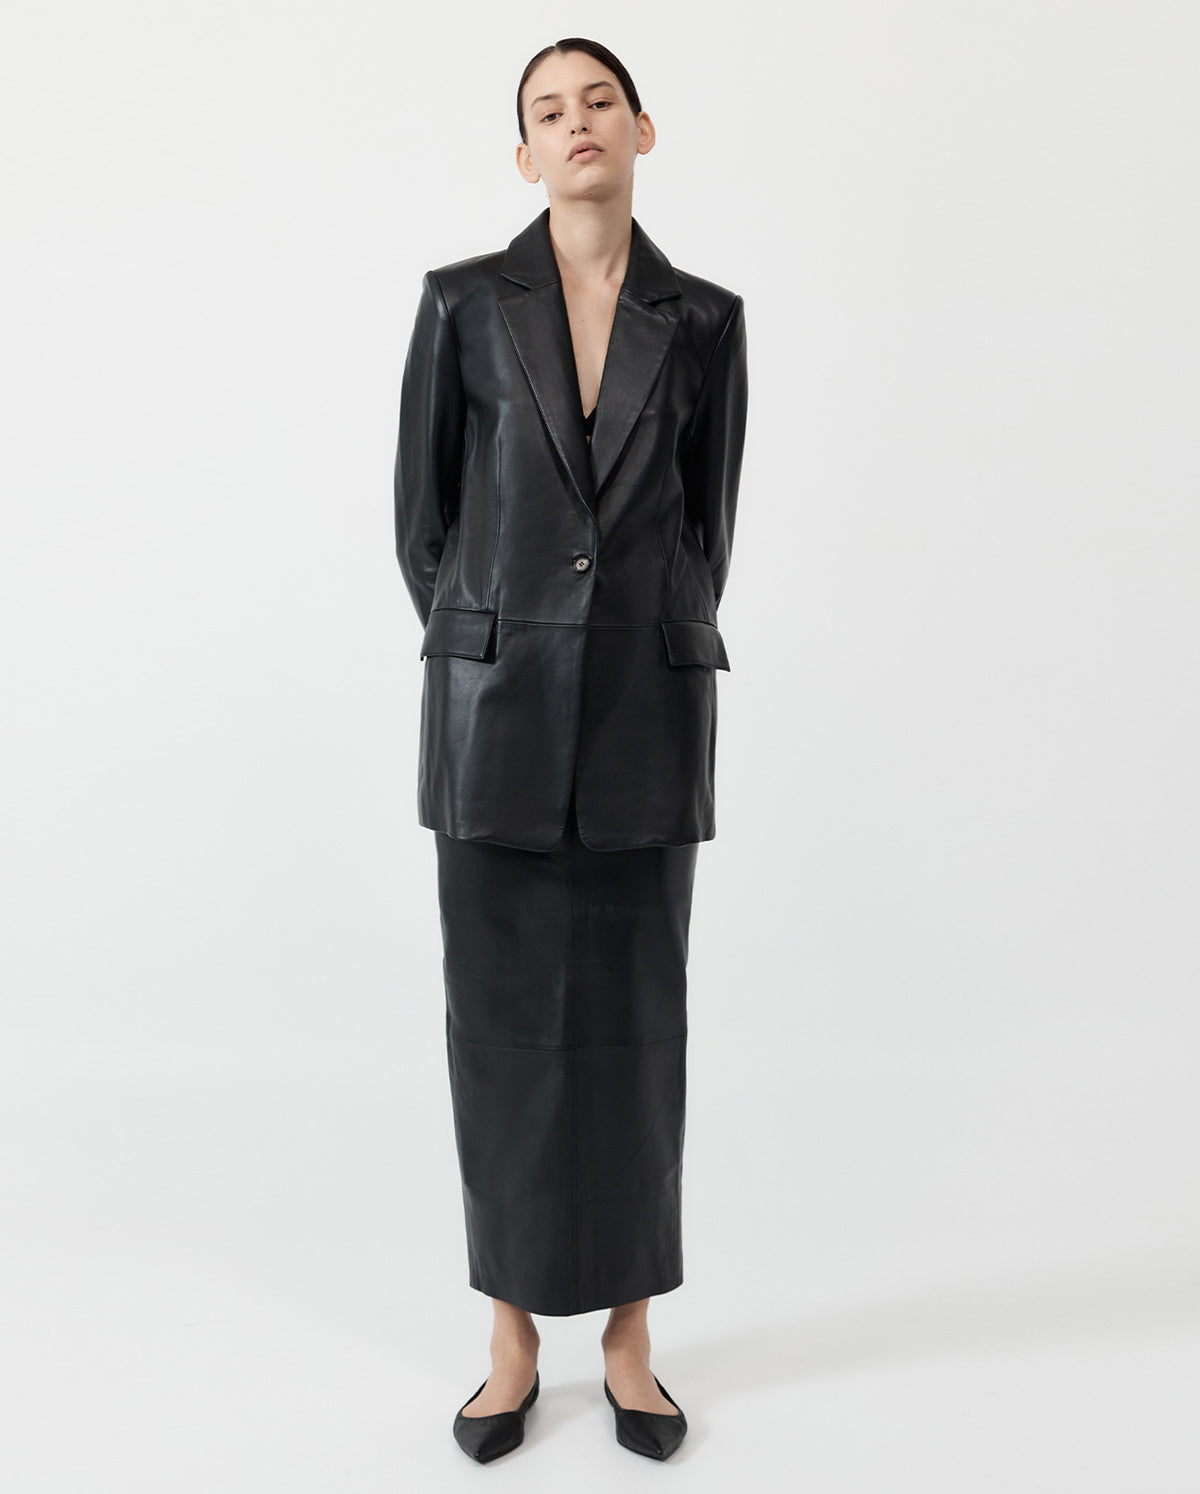 Leather Column Skirt - Black